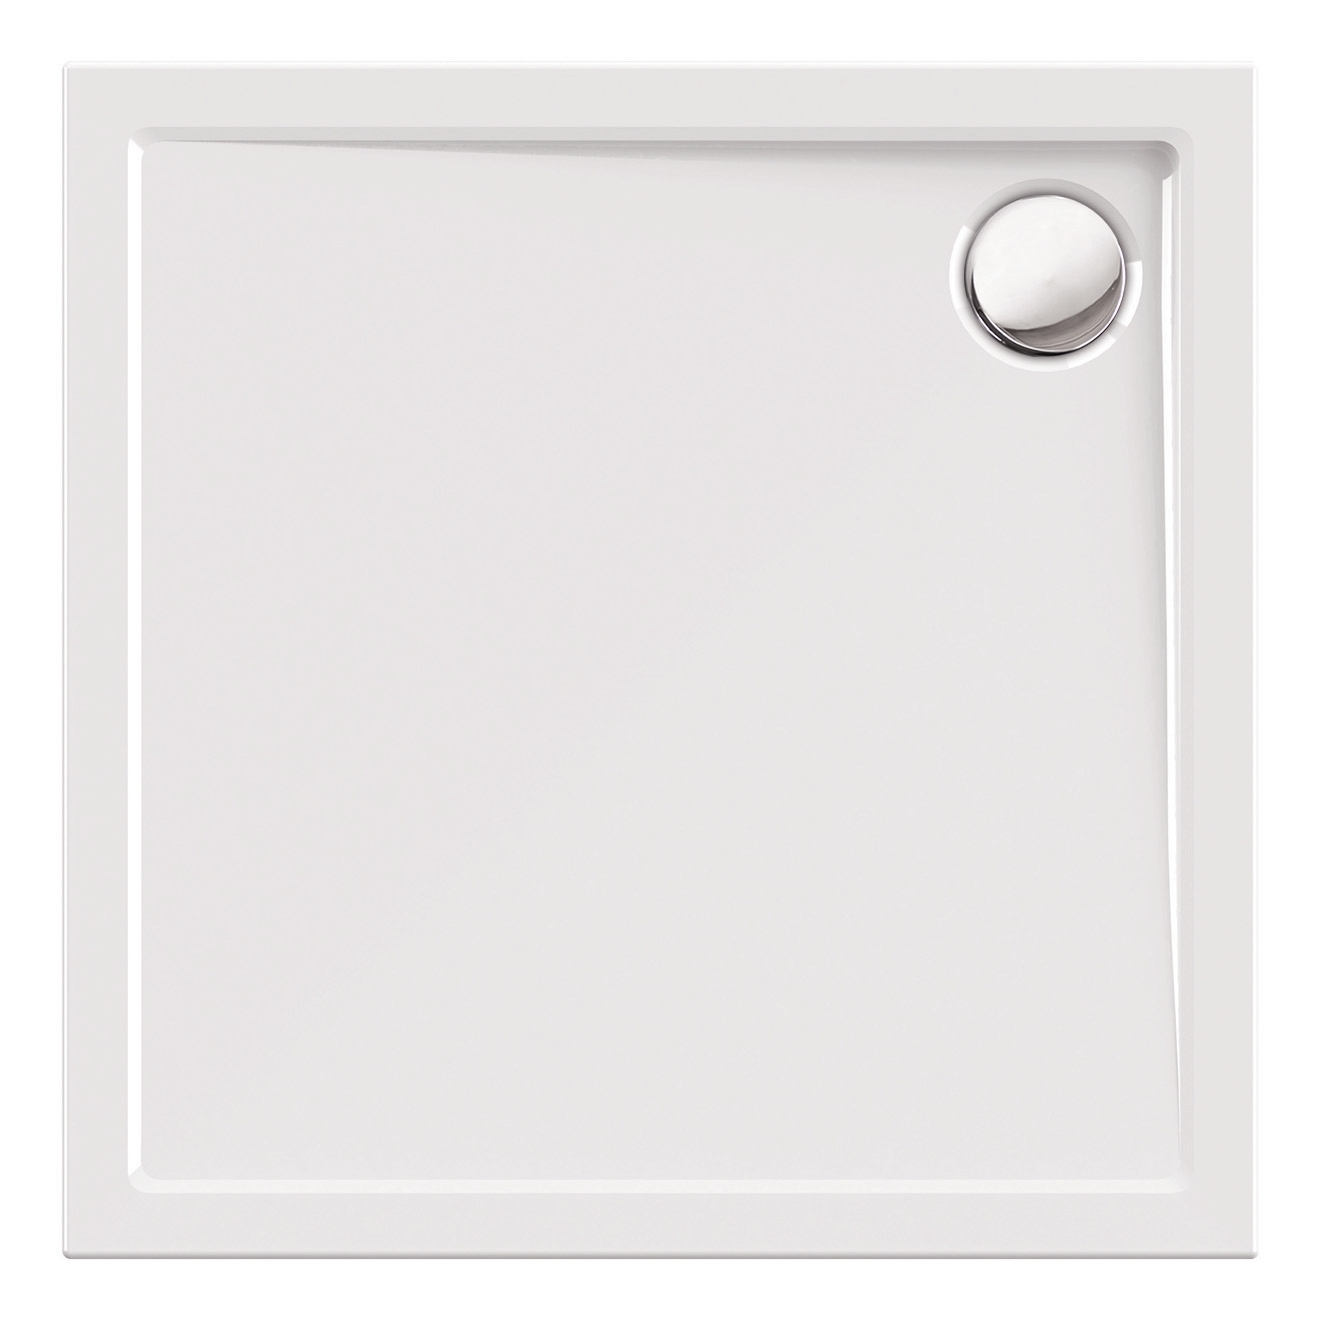 Quadrat-Brausewanne Modern Select aus Acryl, bodengleiche Duschwanne in Weiß, 80 x 80 x 2,5 cm